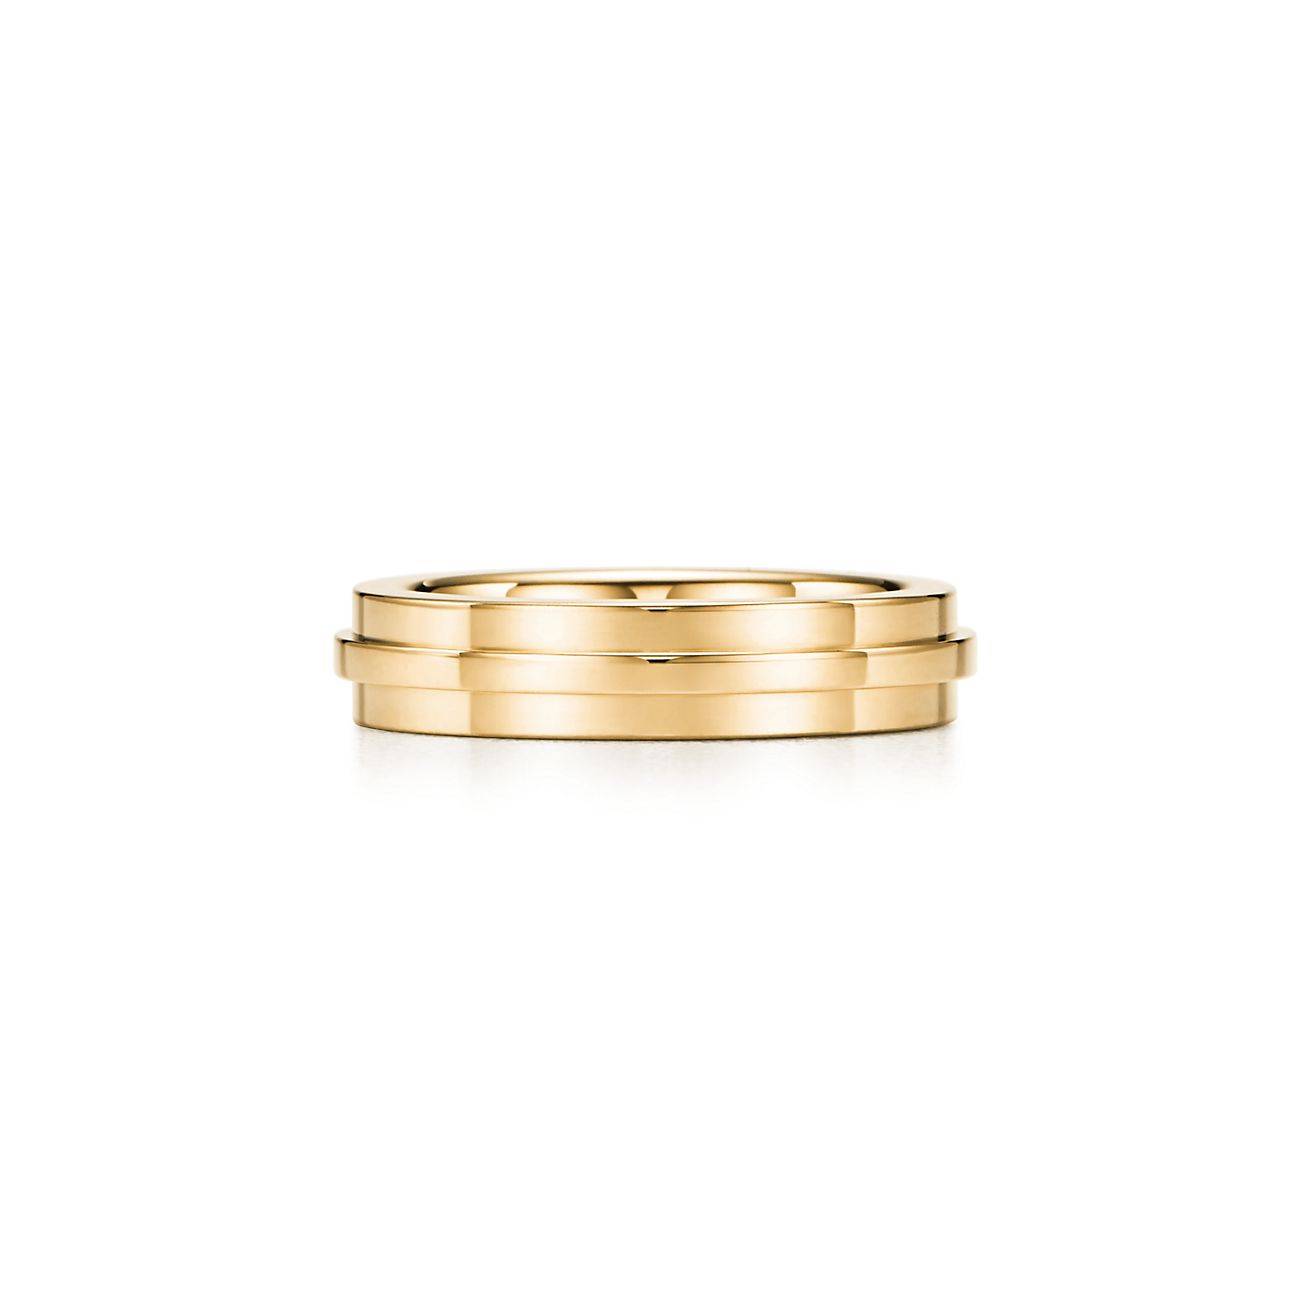 Tiffany T Narrow Ring in 18k Gold